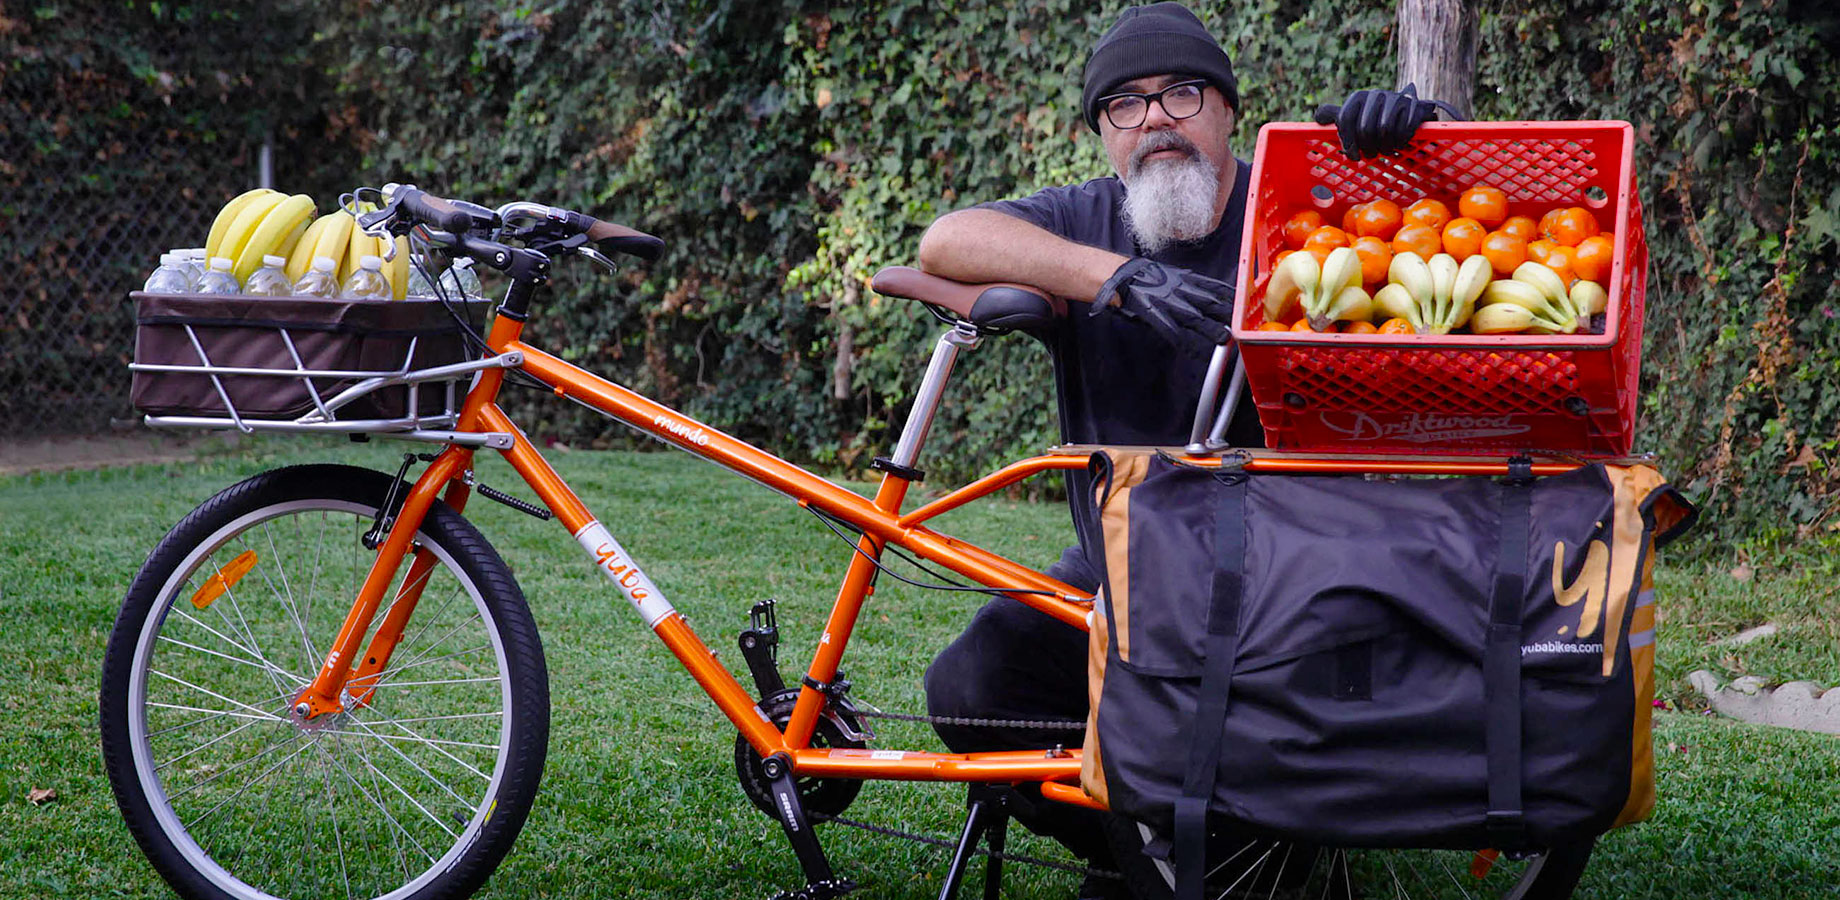 yuba mundo lux cargo bike